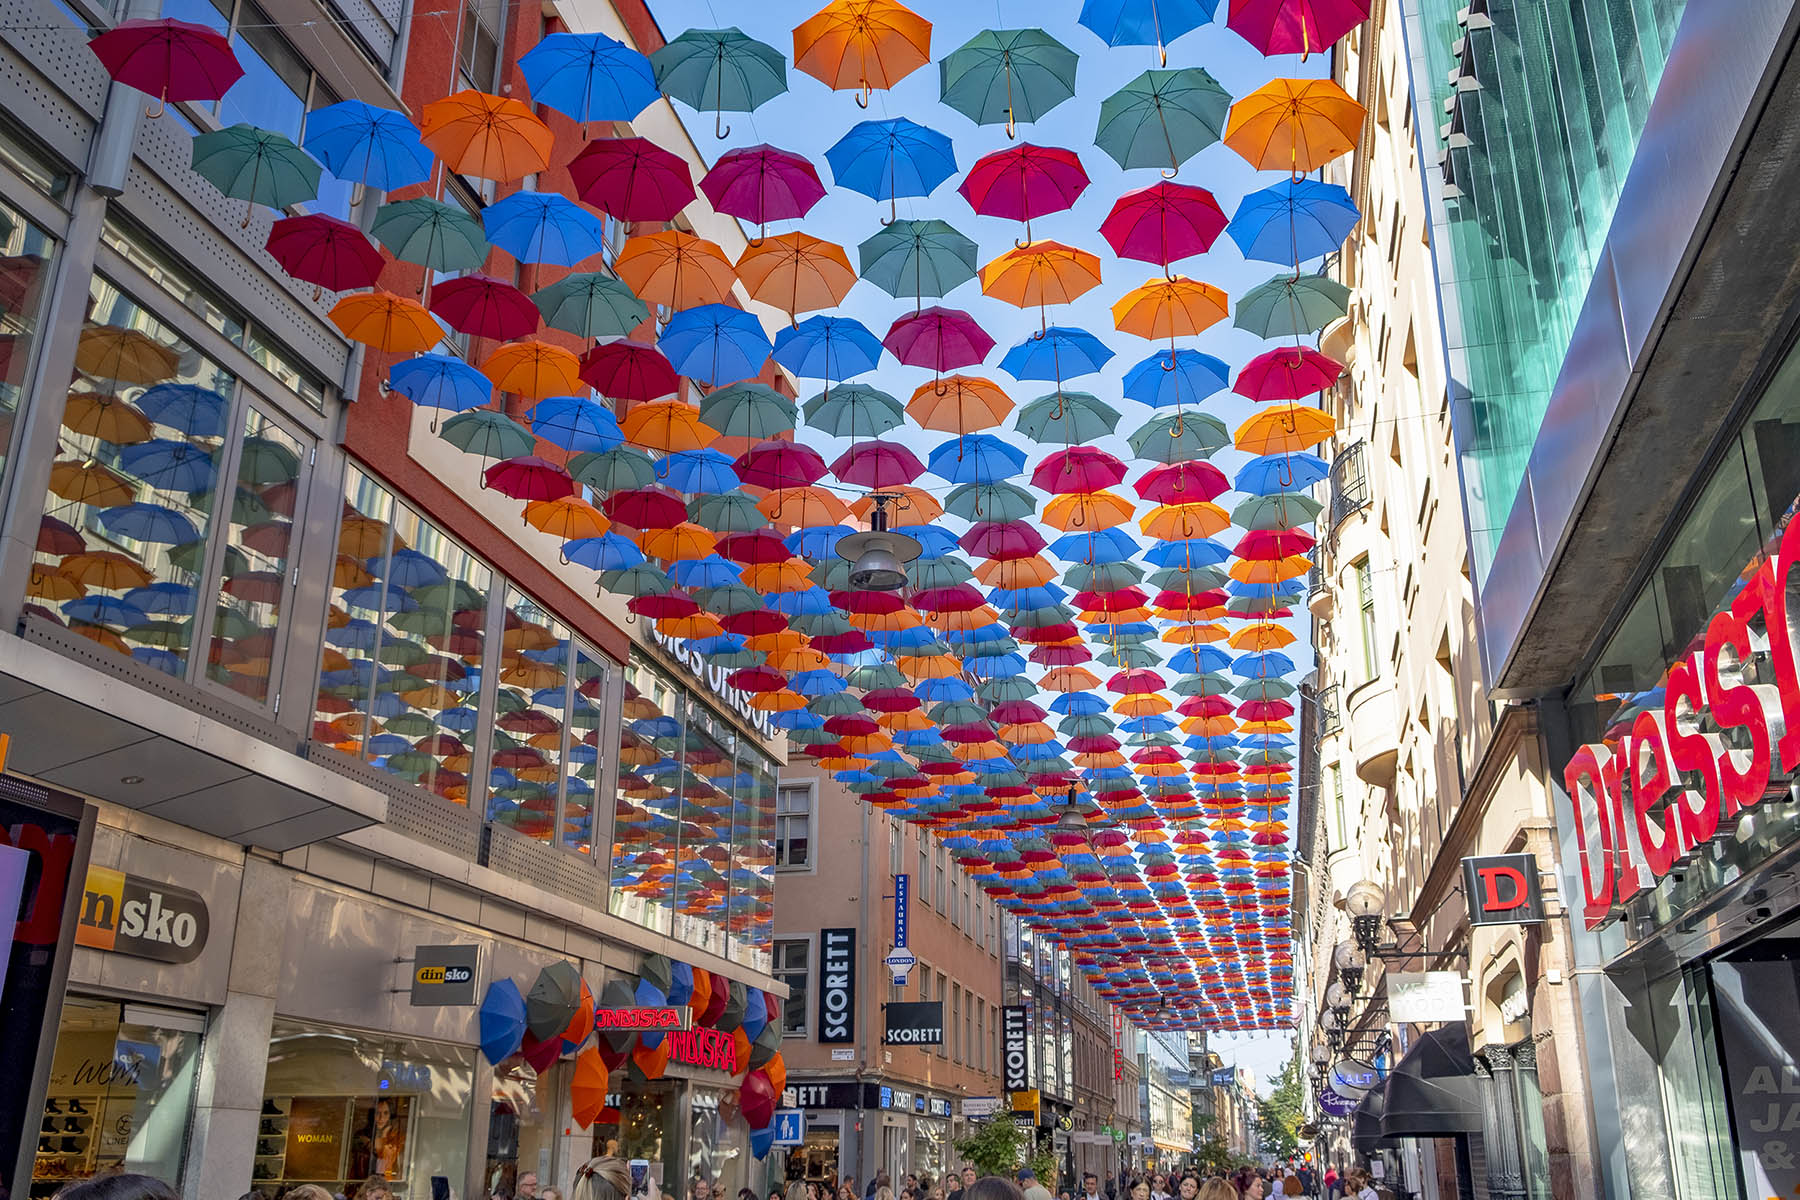 Umbrella Sky Projekt paraplyer på Drottninggatan i Stockholm